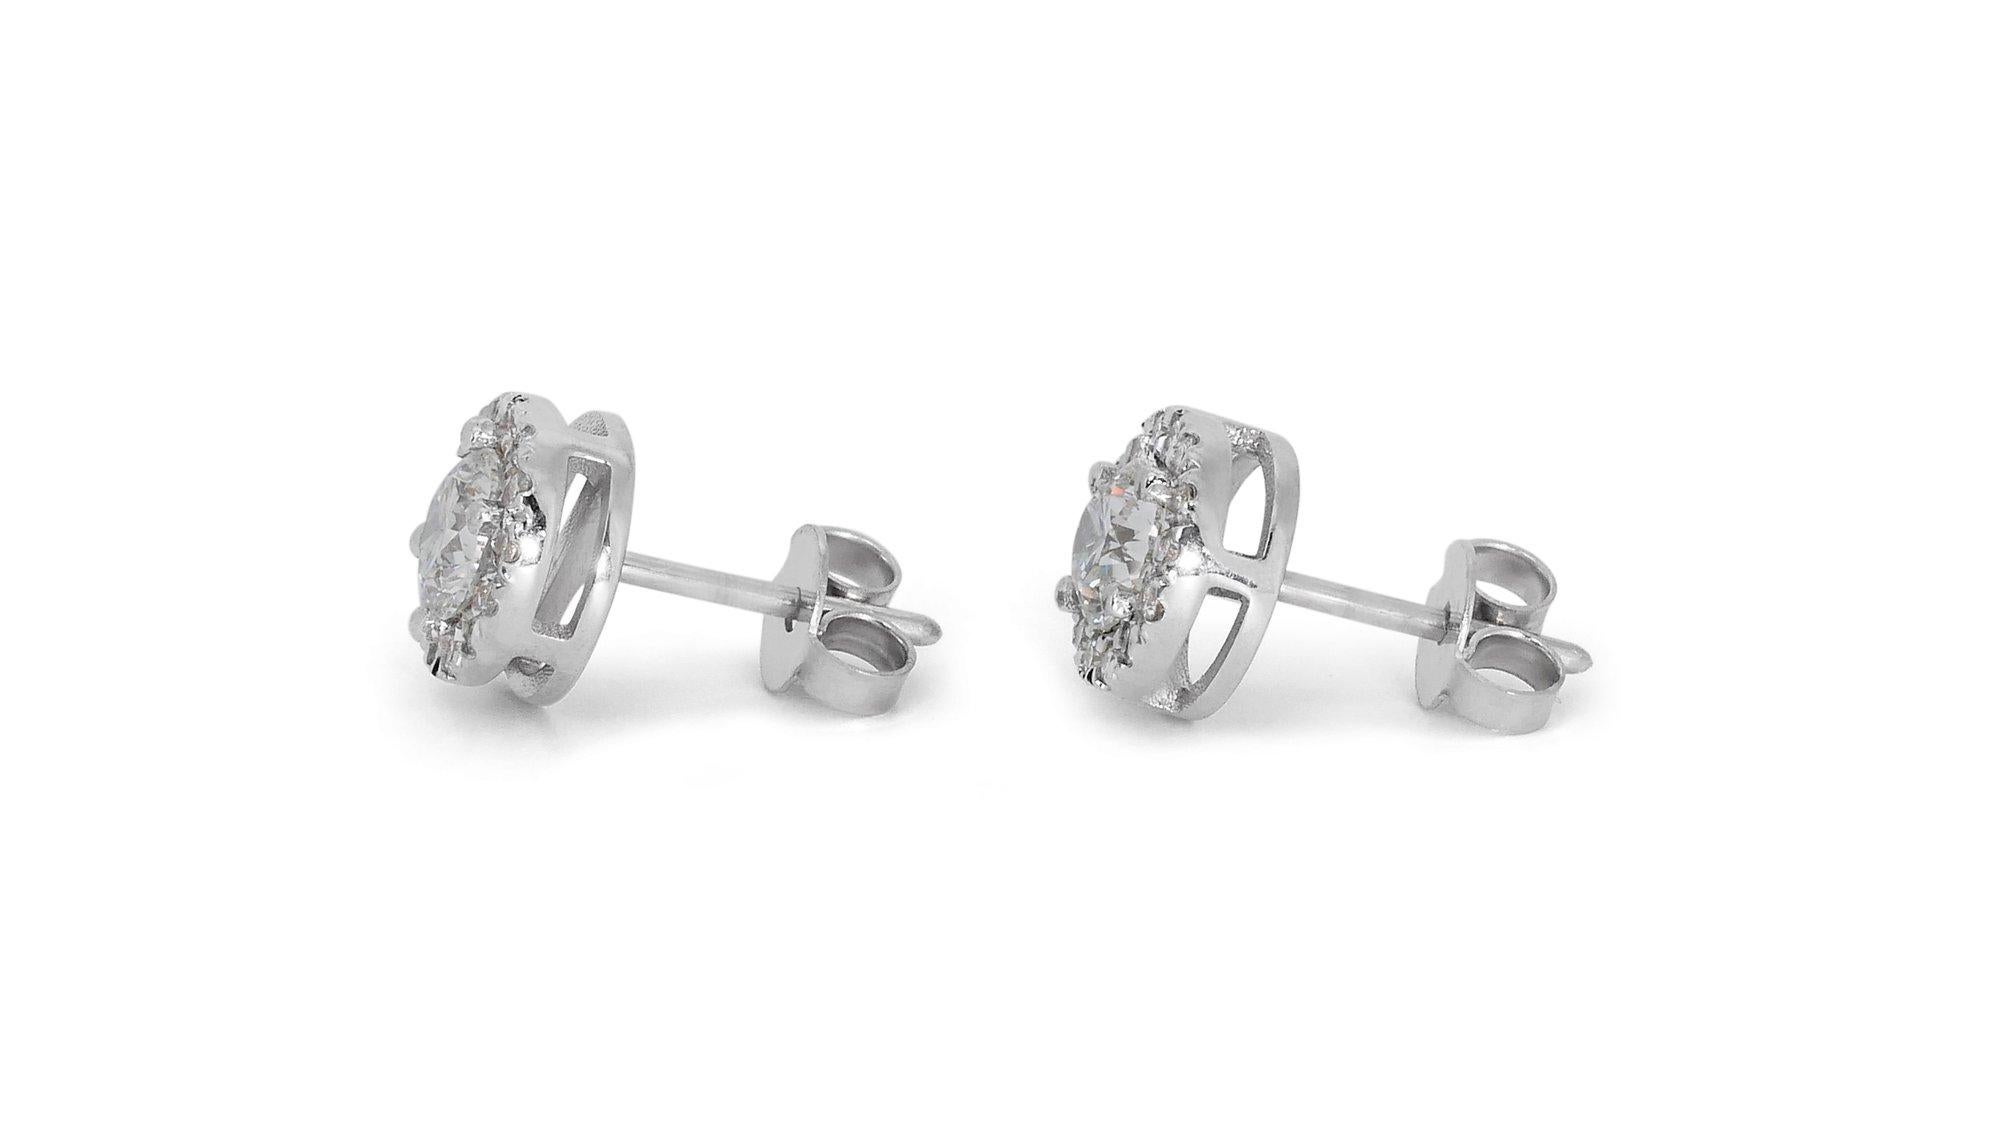 Women's Dazzling 1.65ct Diamond Halo Stud Earrings in 18k White Gold - GIA Certified For Sale